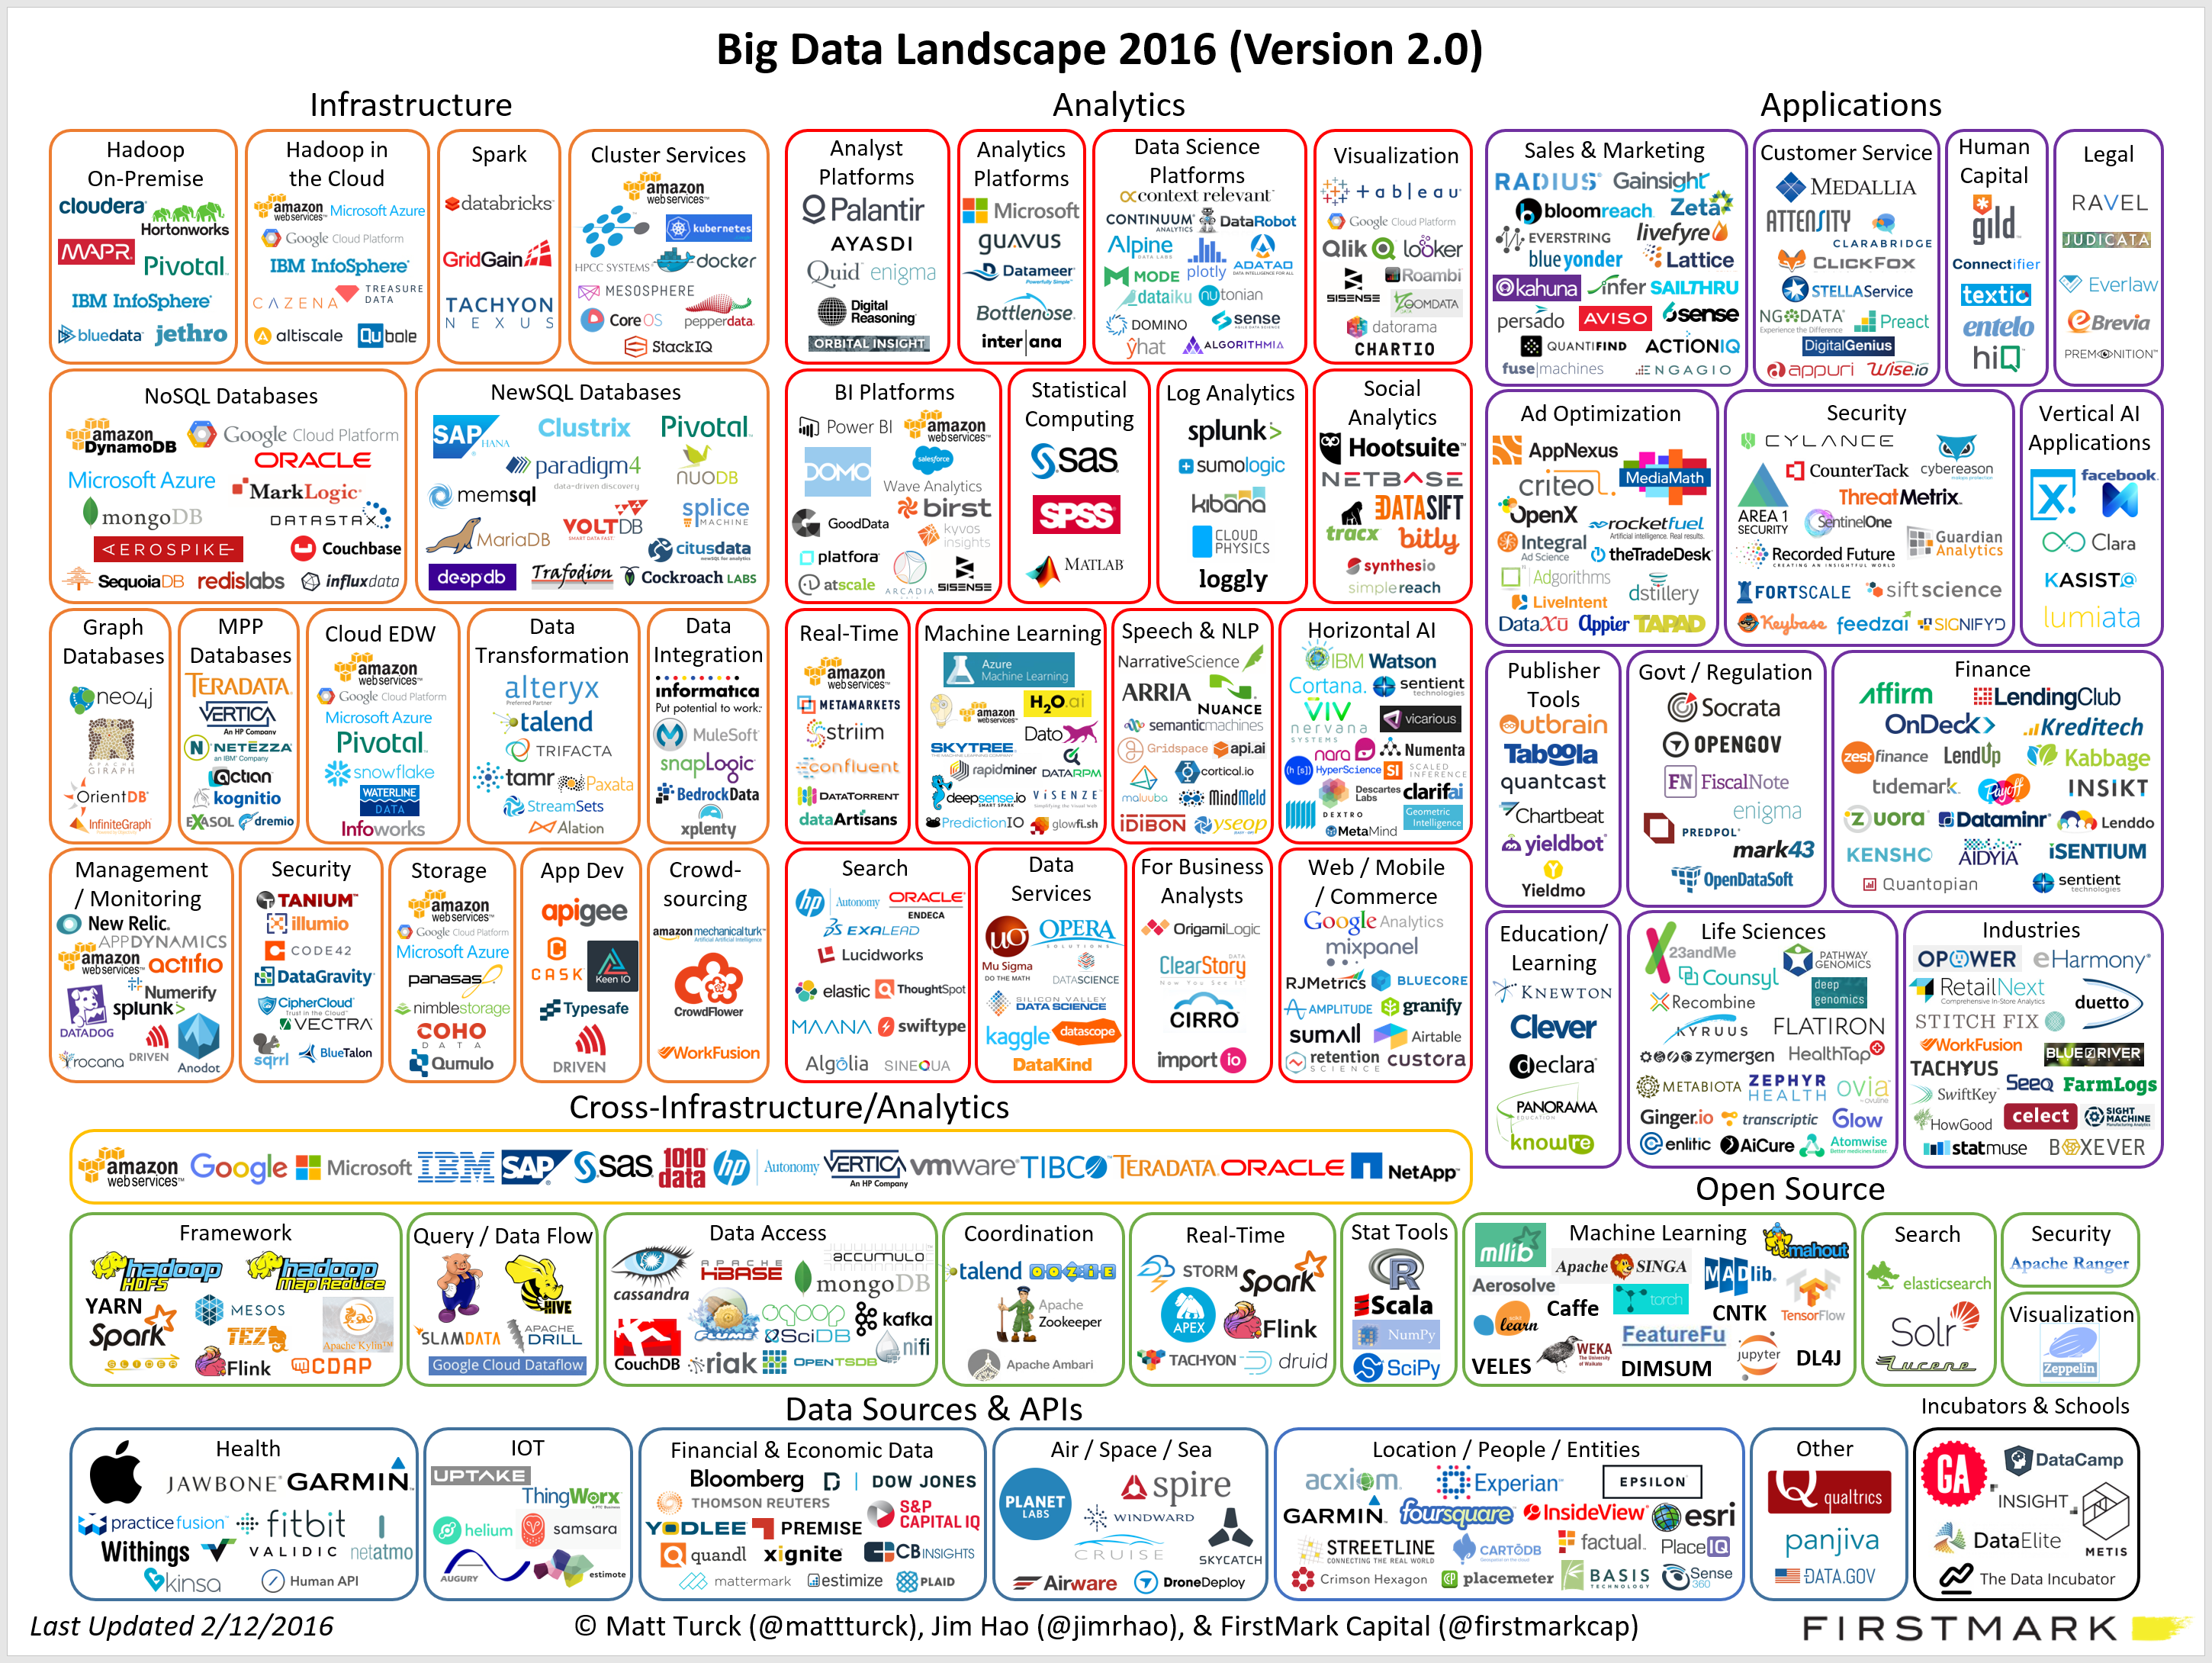 The 2016 Big Data Landscape